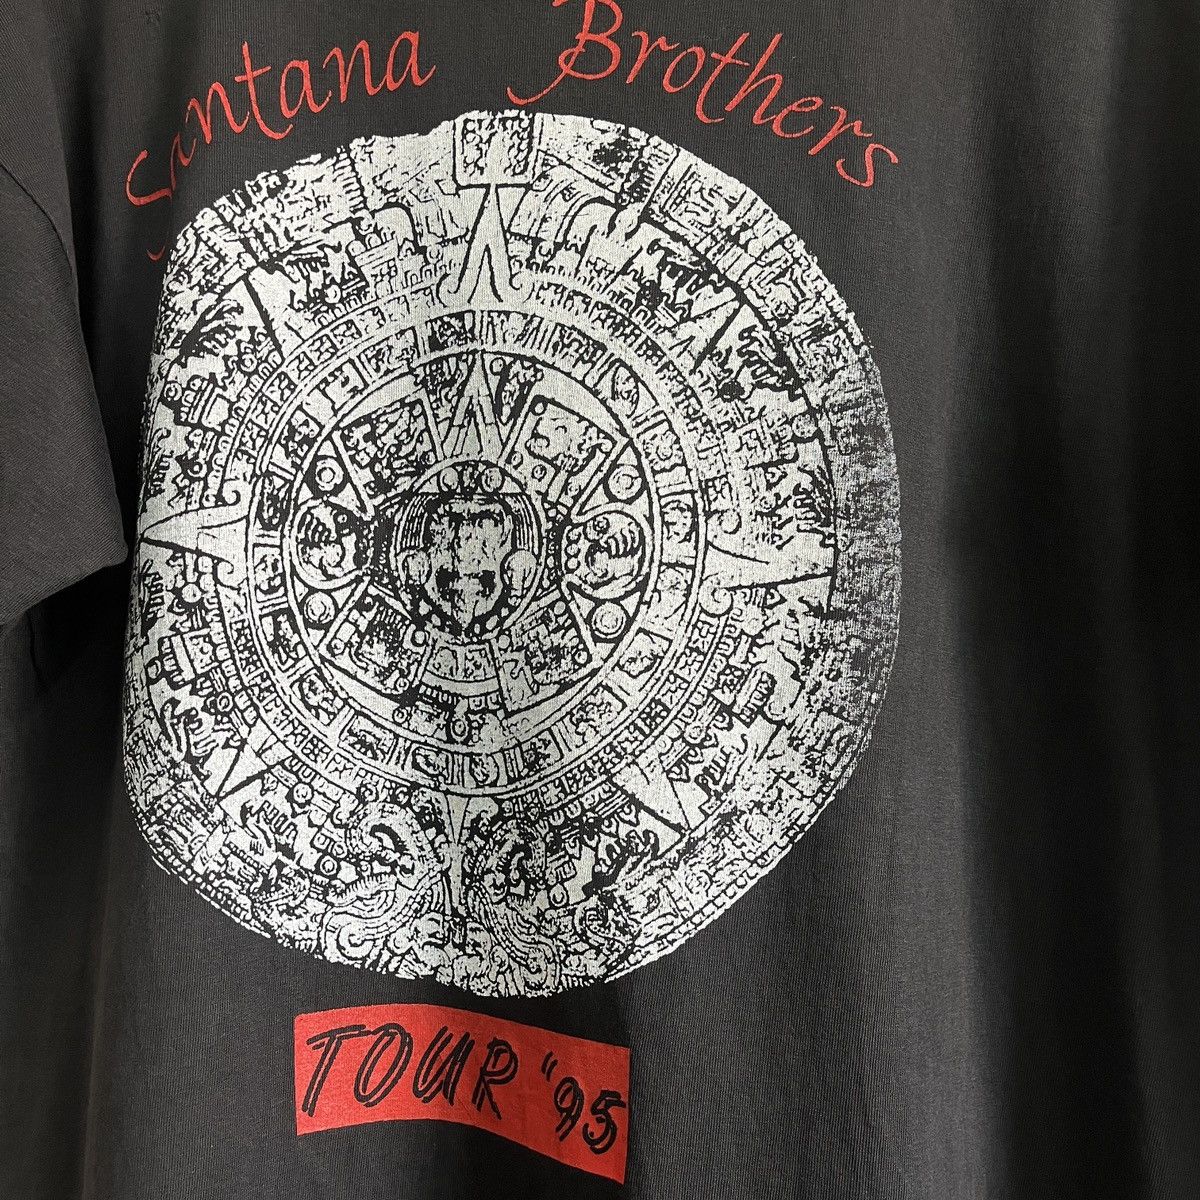 Vintage - Rock Santana Brothers In Concert Tour 95 TShirt - 10